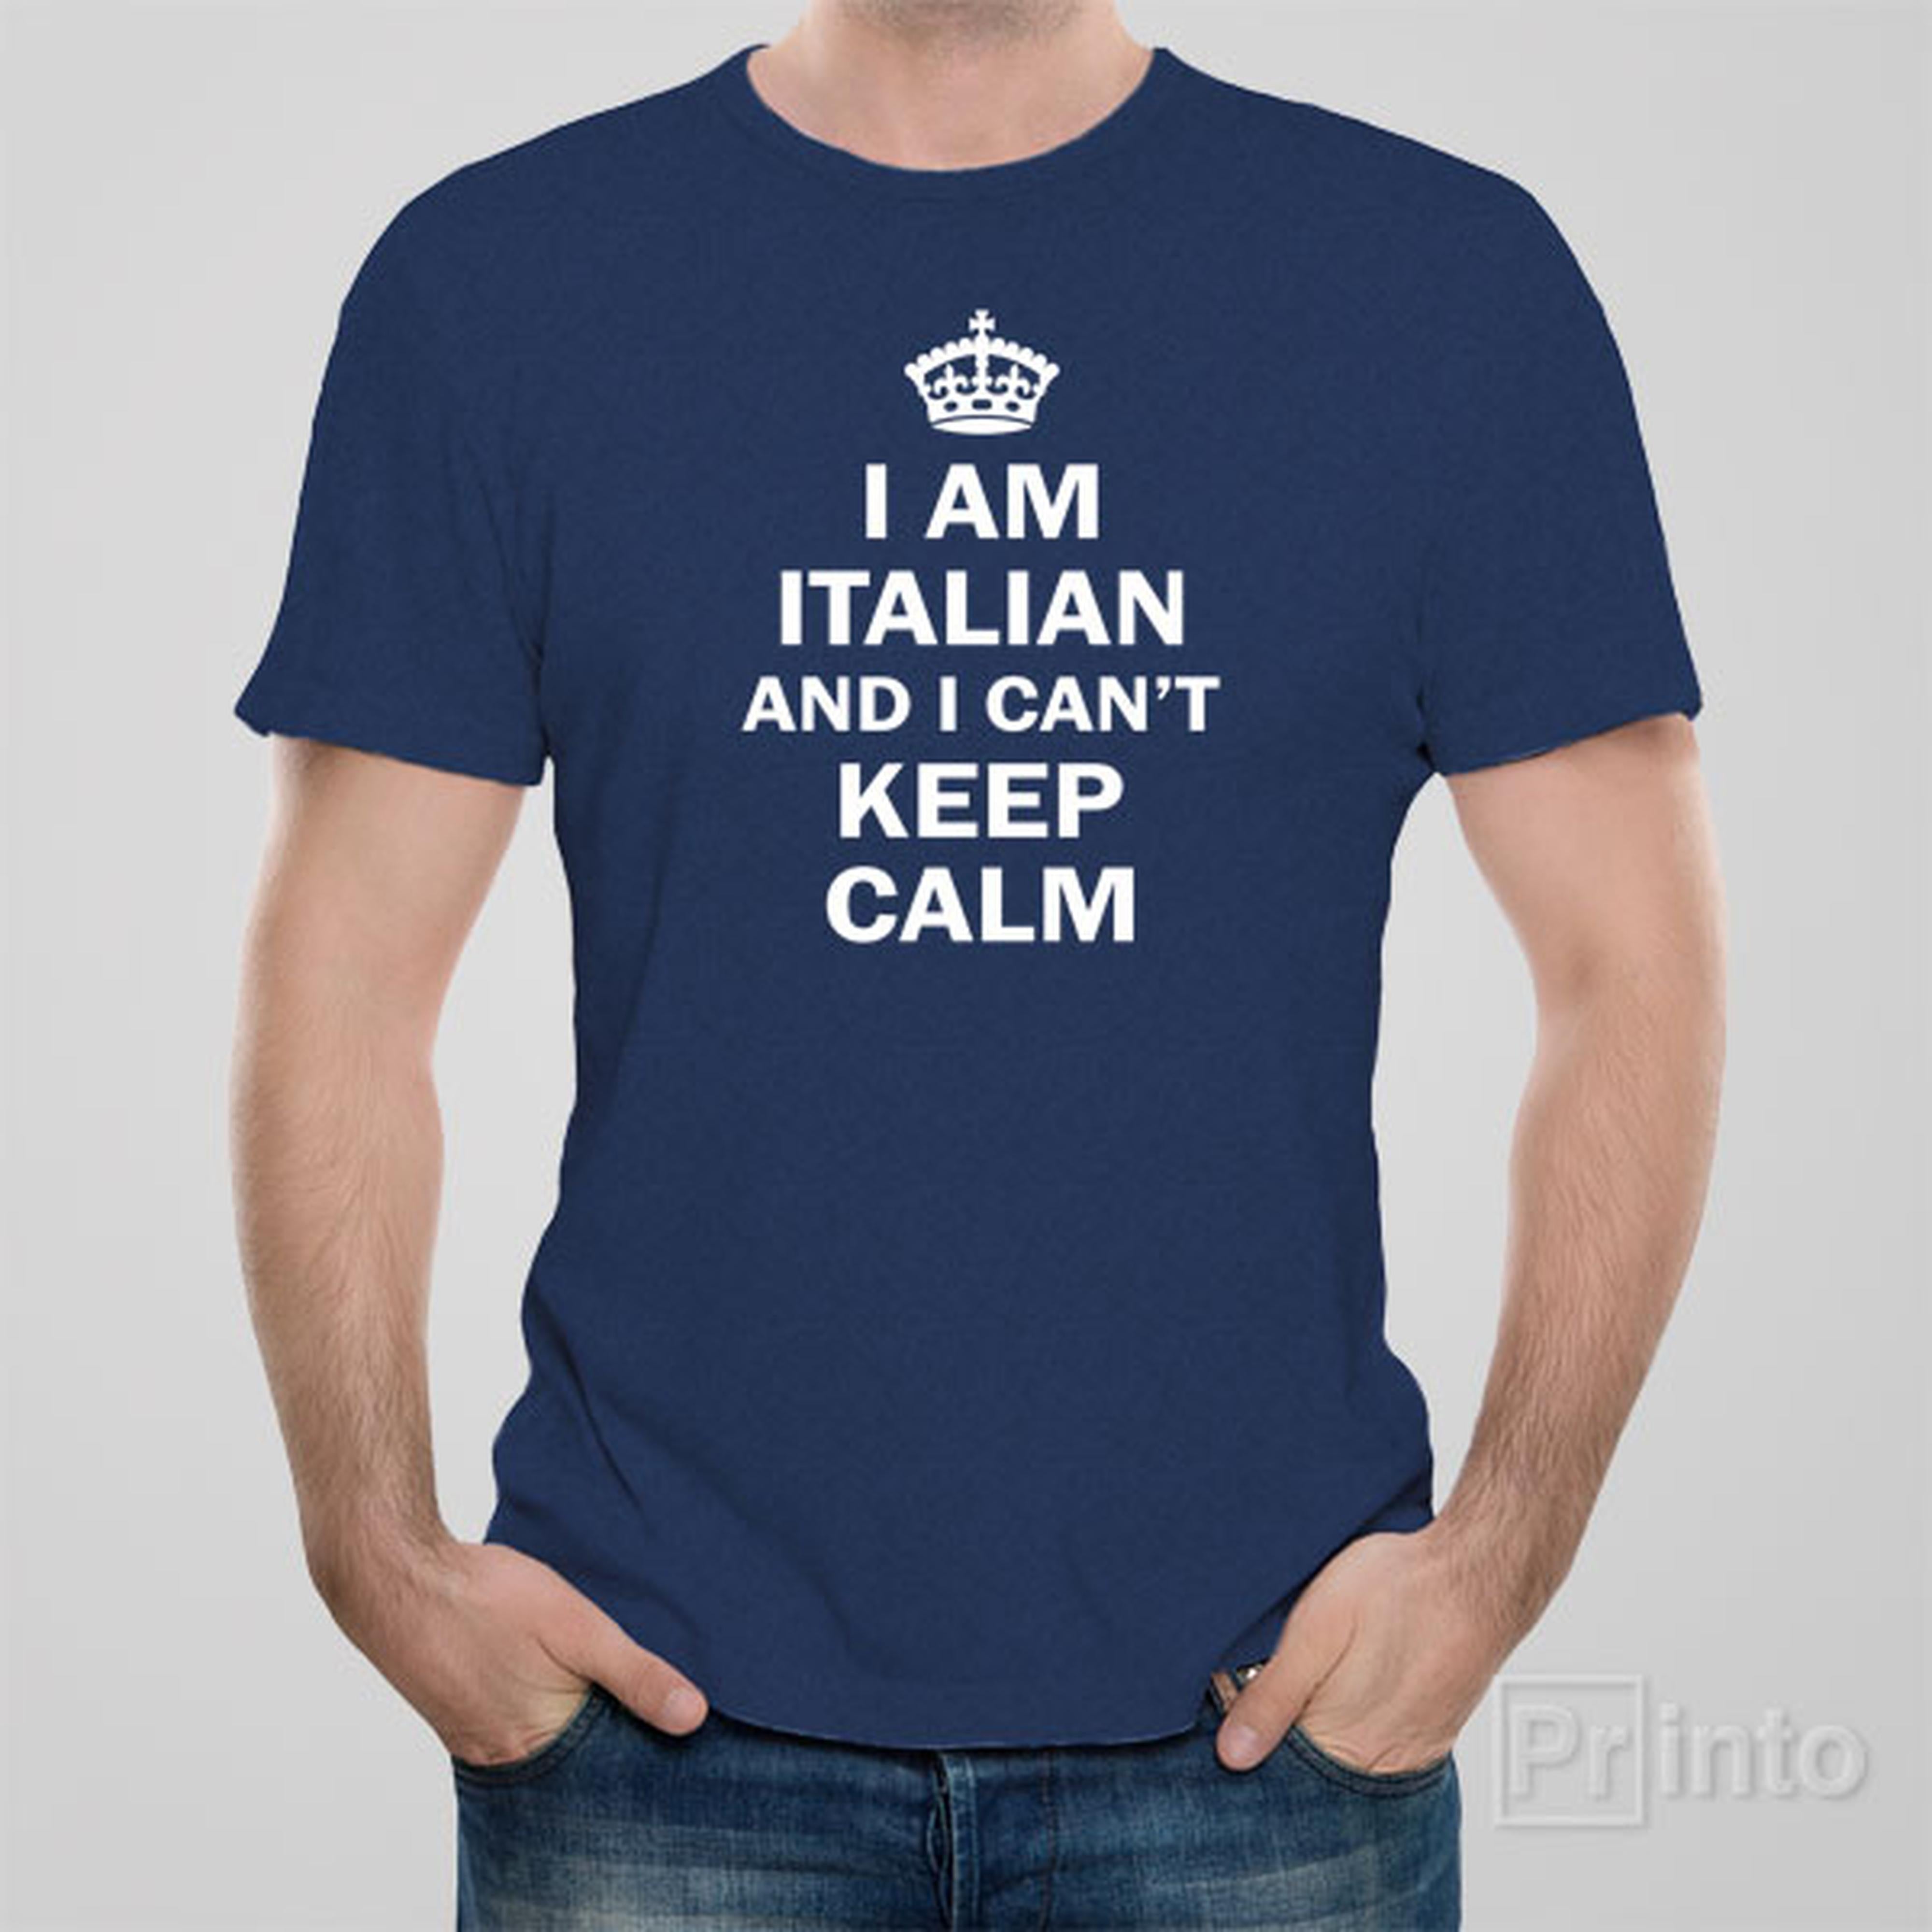 i-am-italian-and-i-cannot-keep-calm-t-shirt